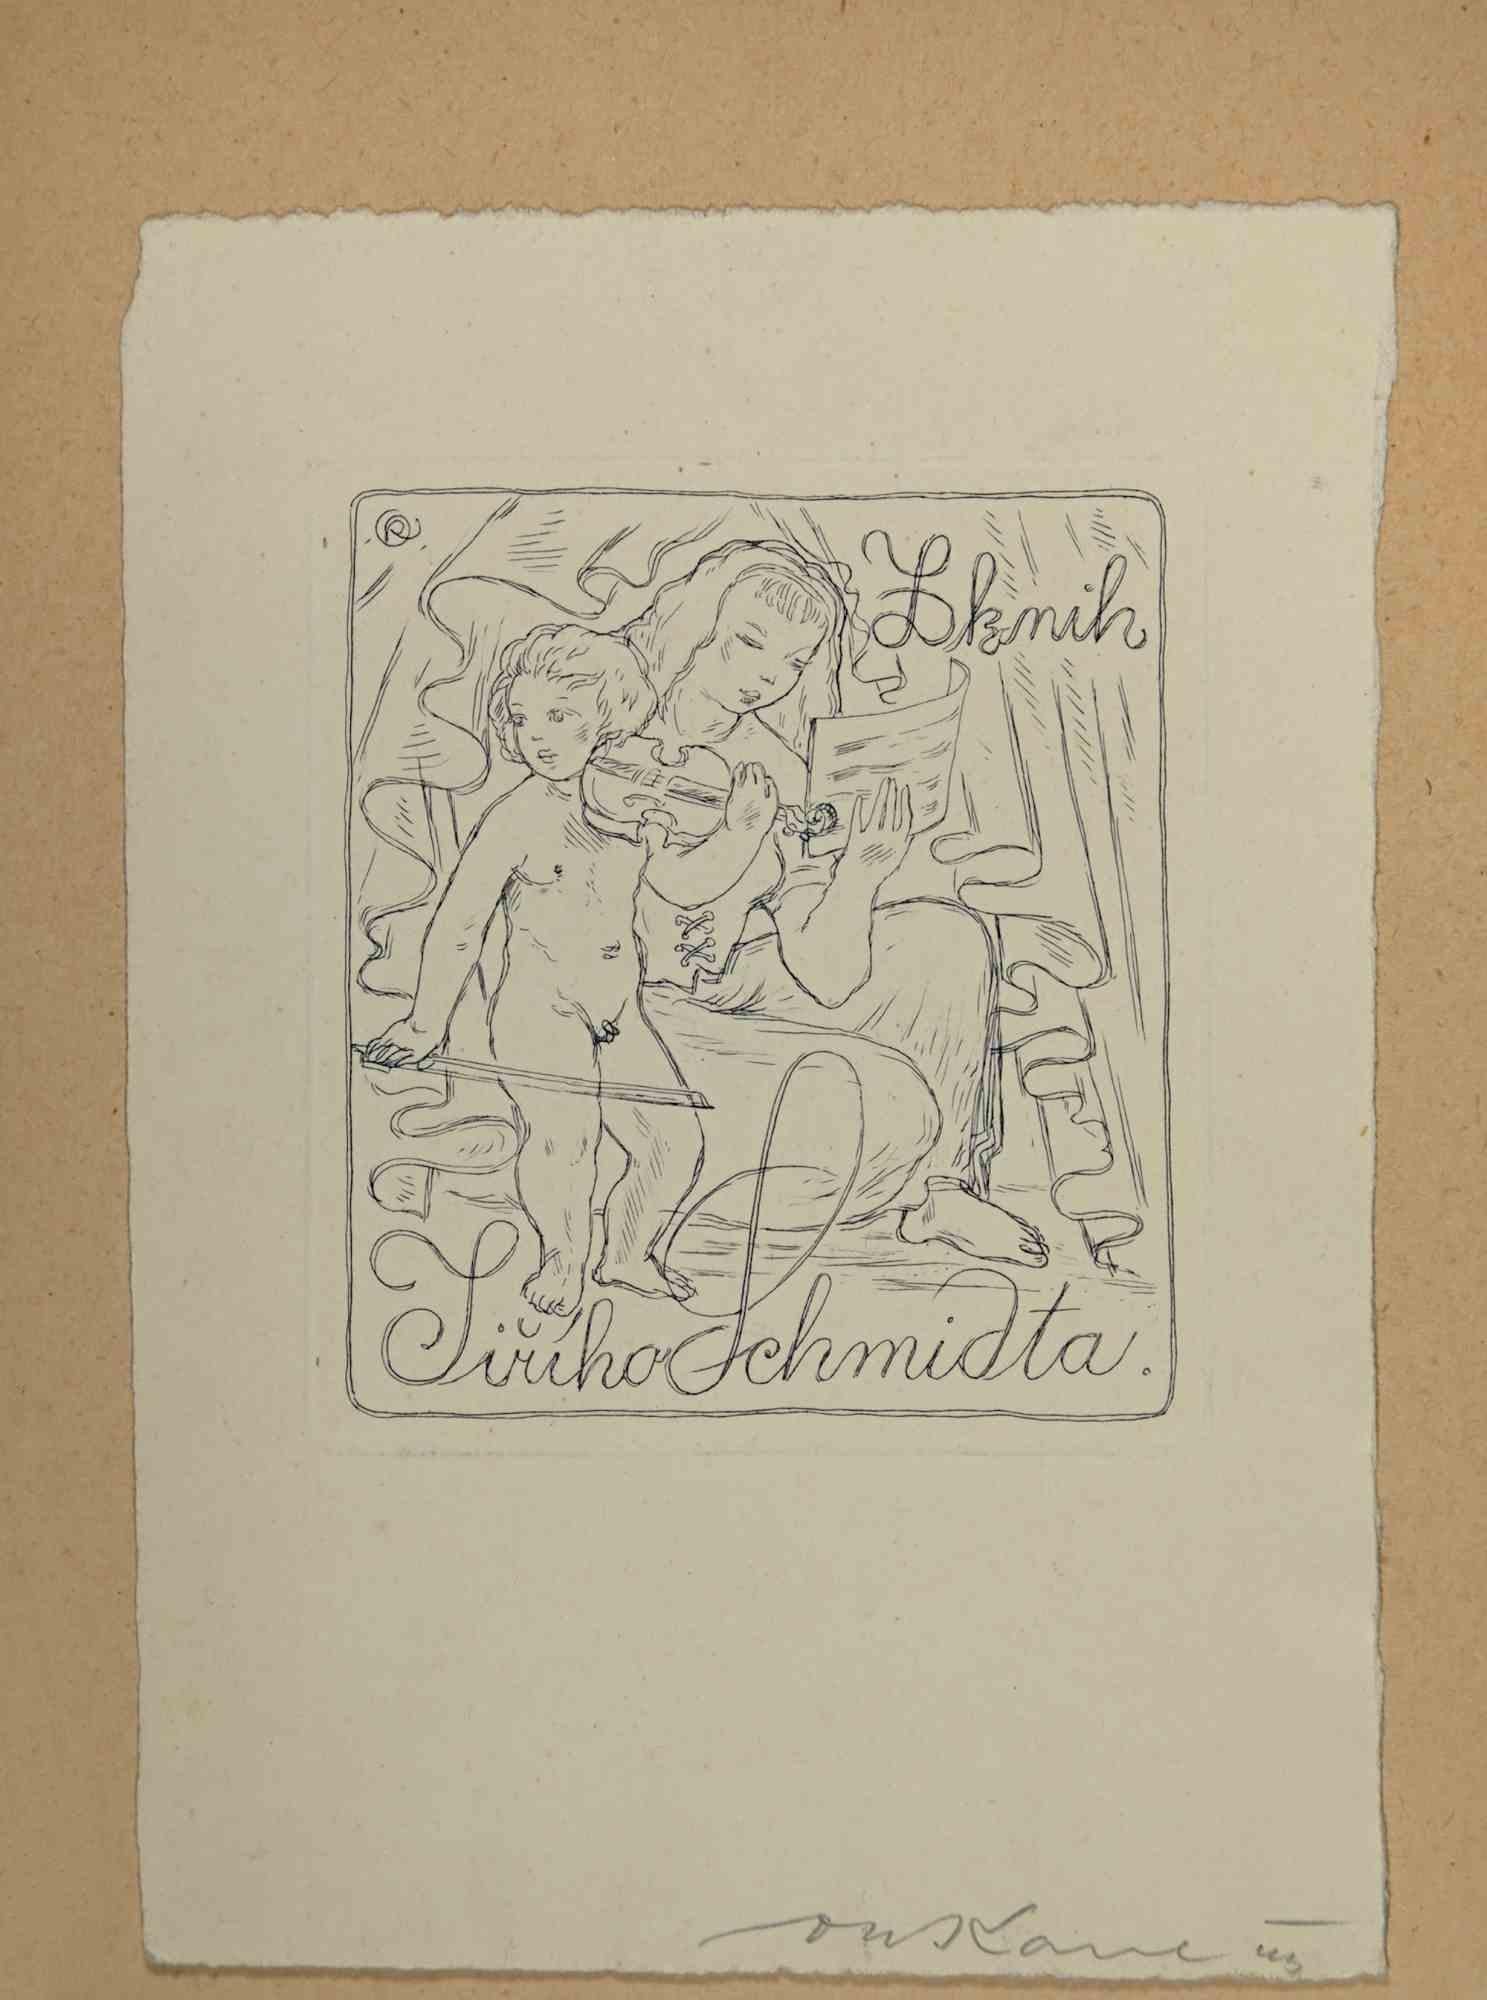 Unknown Figurative Print - Ex-Libris - Sireho Schmidta - Woodcut Print - Mid-20th Century